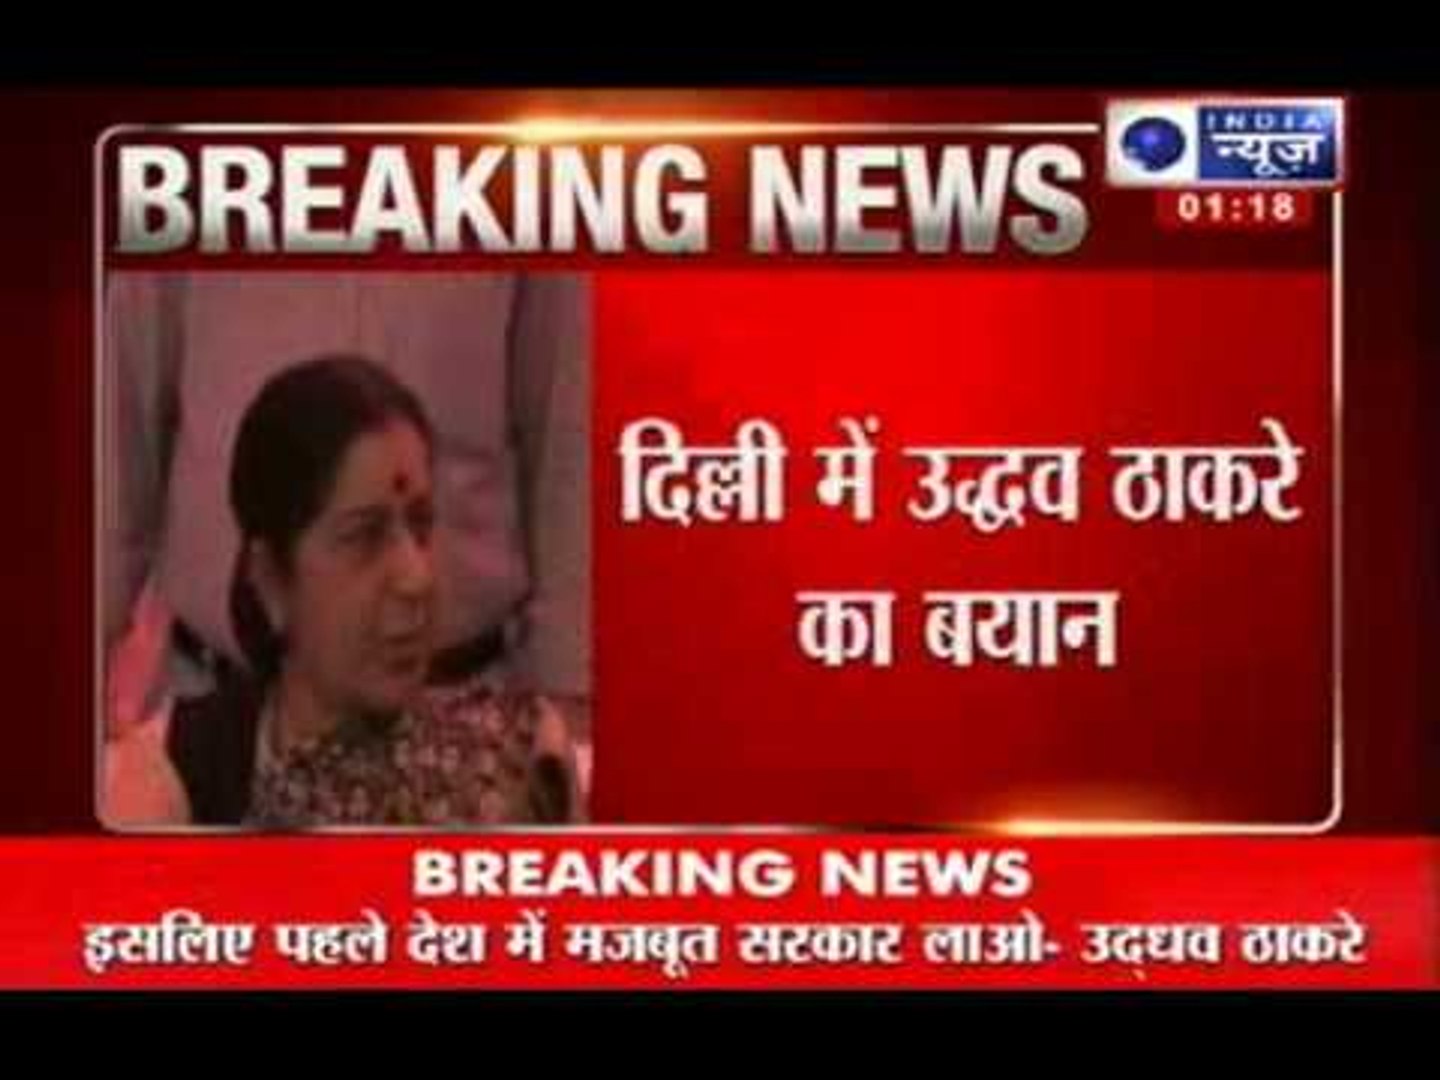 India News: Uddhav Thackeray in Delhi for a political visit